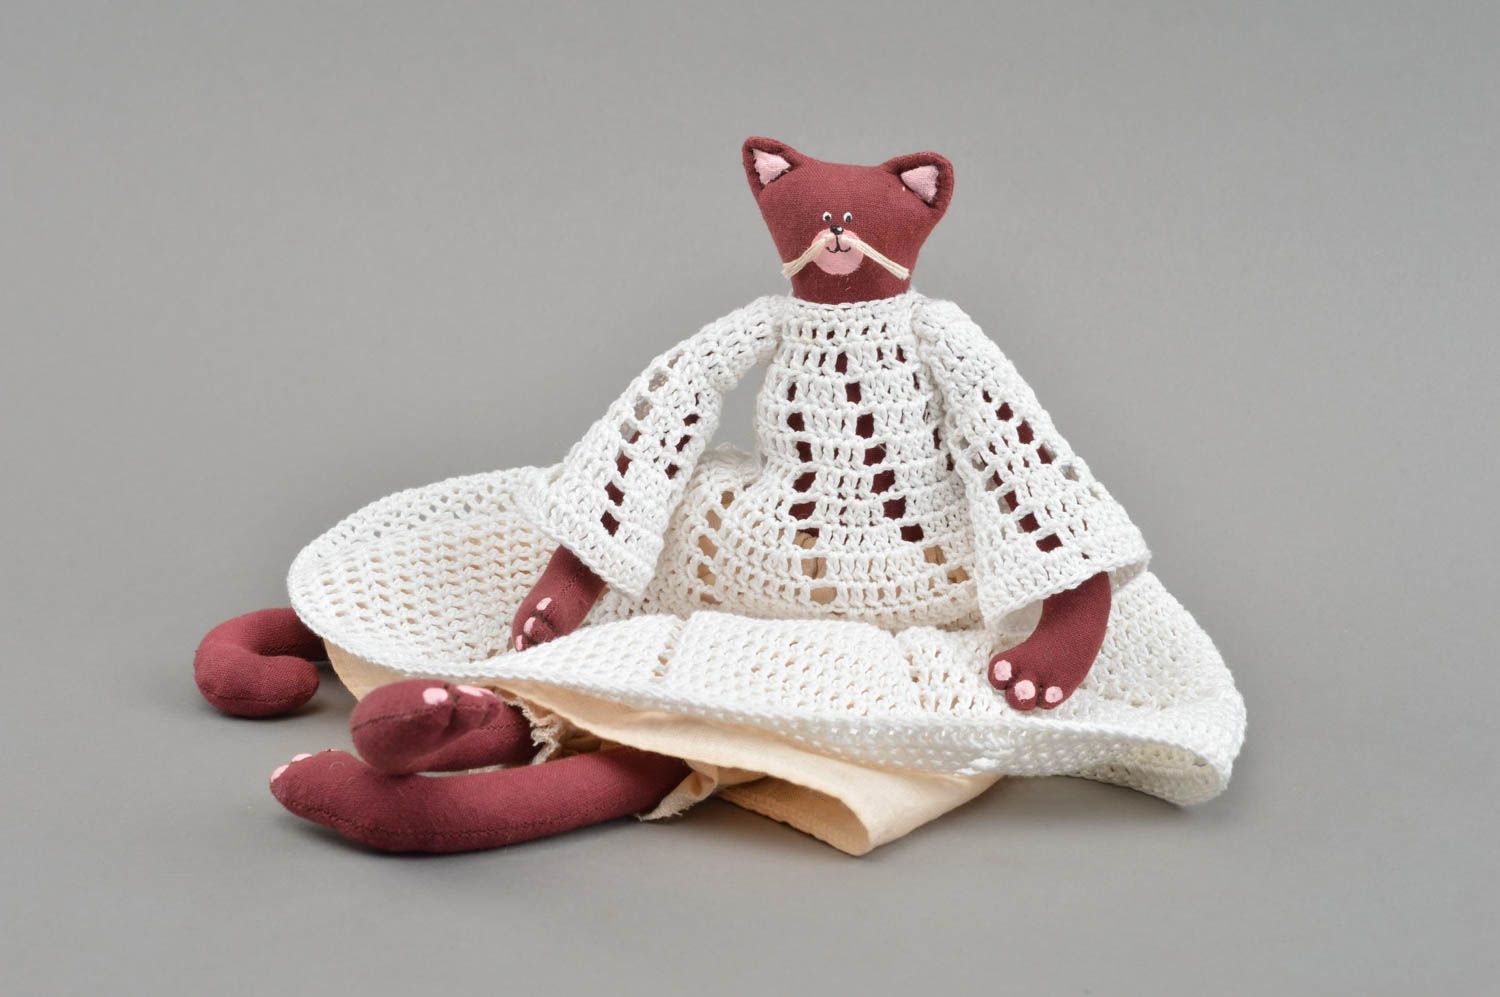 Fabric toy cat in dress designer stuffed toy handmade nursery decor ideas photo 3